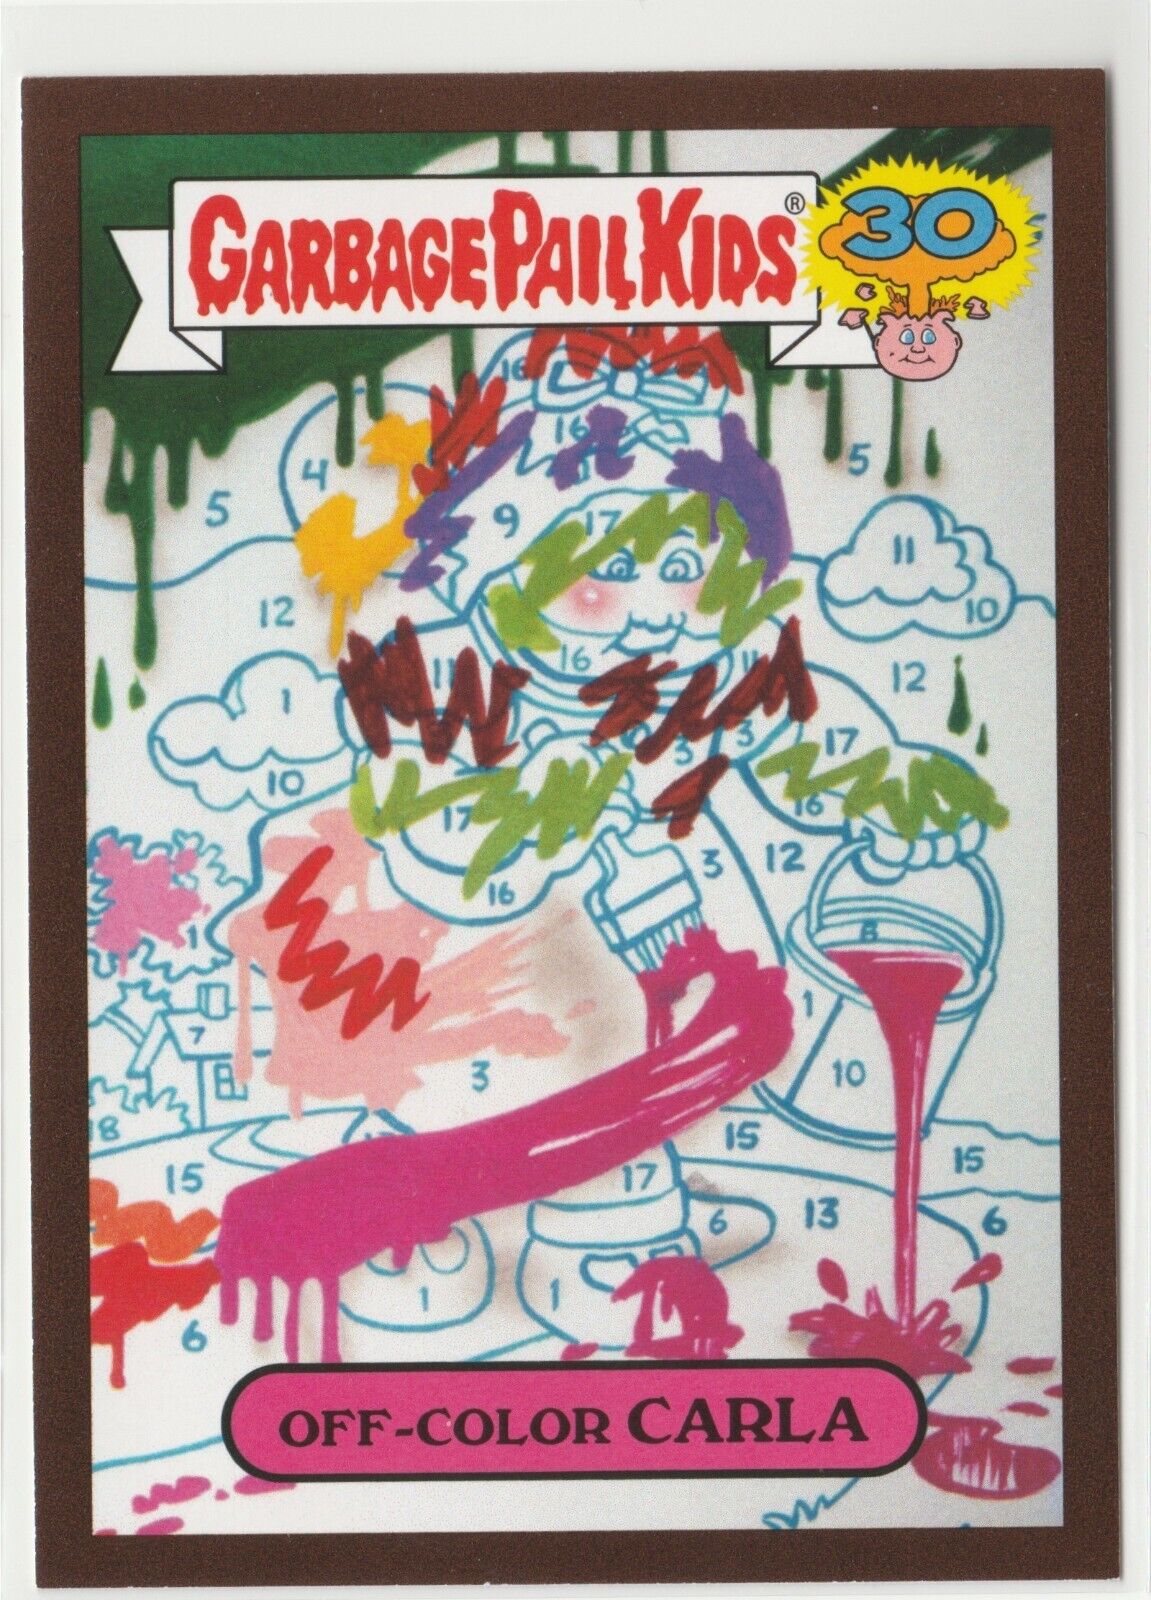 Garbage Pail Kids Off-Color Carla #3a RARE BROWN 2015 30th Anniversary GPK 3970